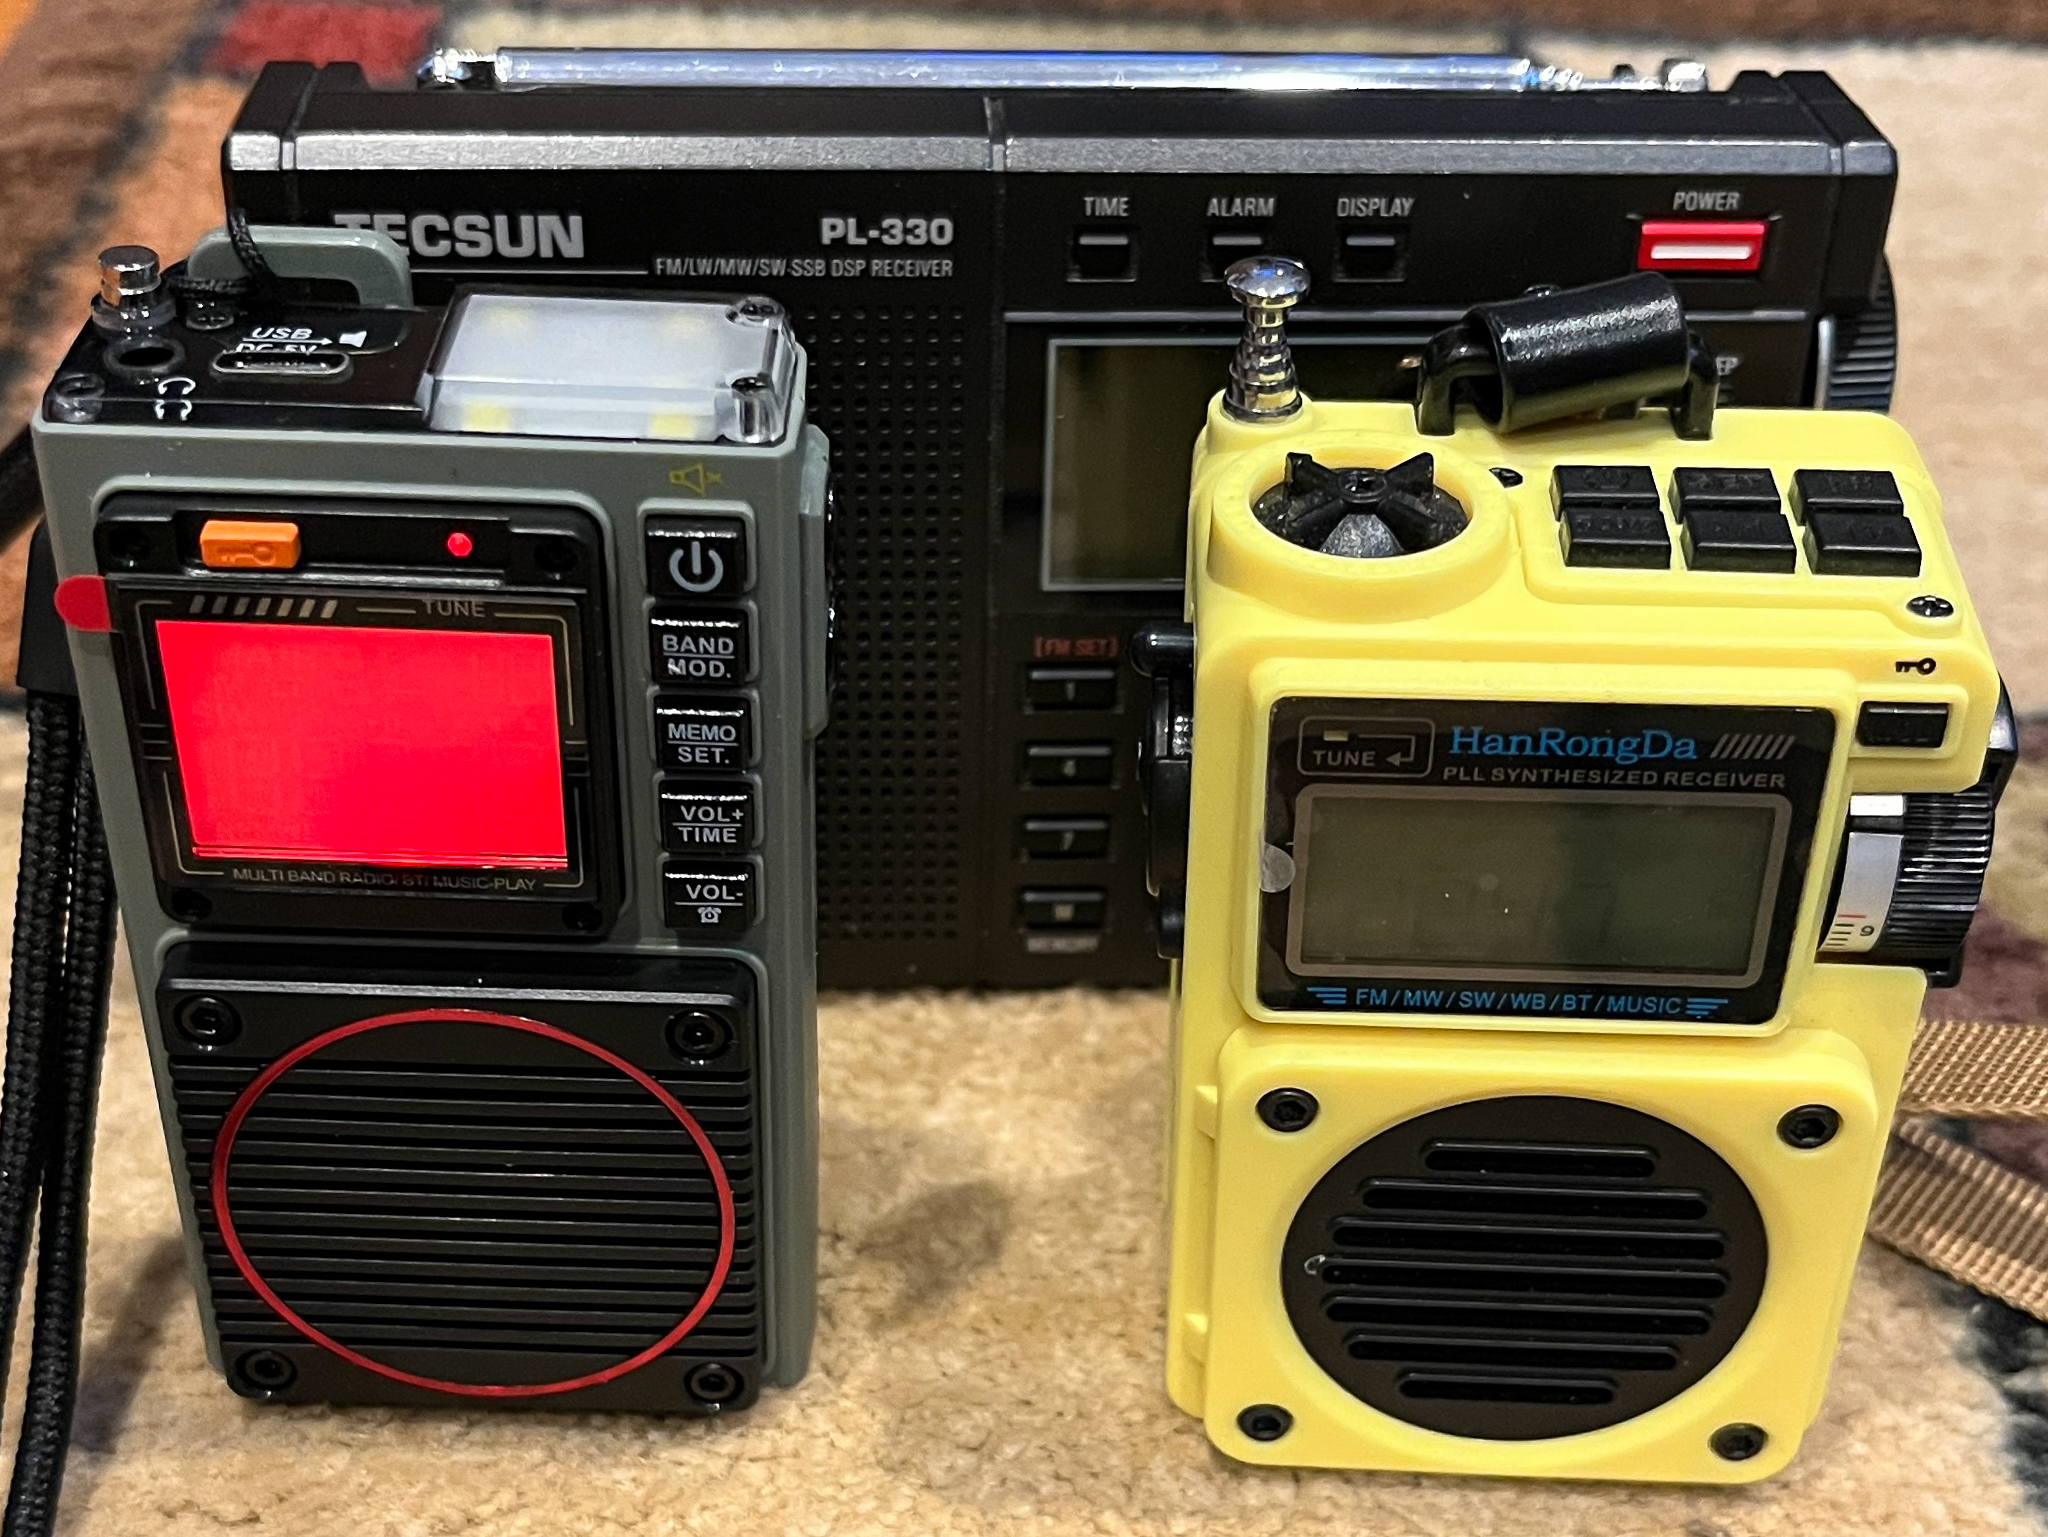 Videyas Retro AM FM Radio, Shortwave Portable Vintage Radio with Bluetooth  Speaker, Flashlight, Best Reception, Support TF Card, USB Disk for Home